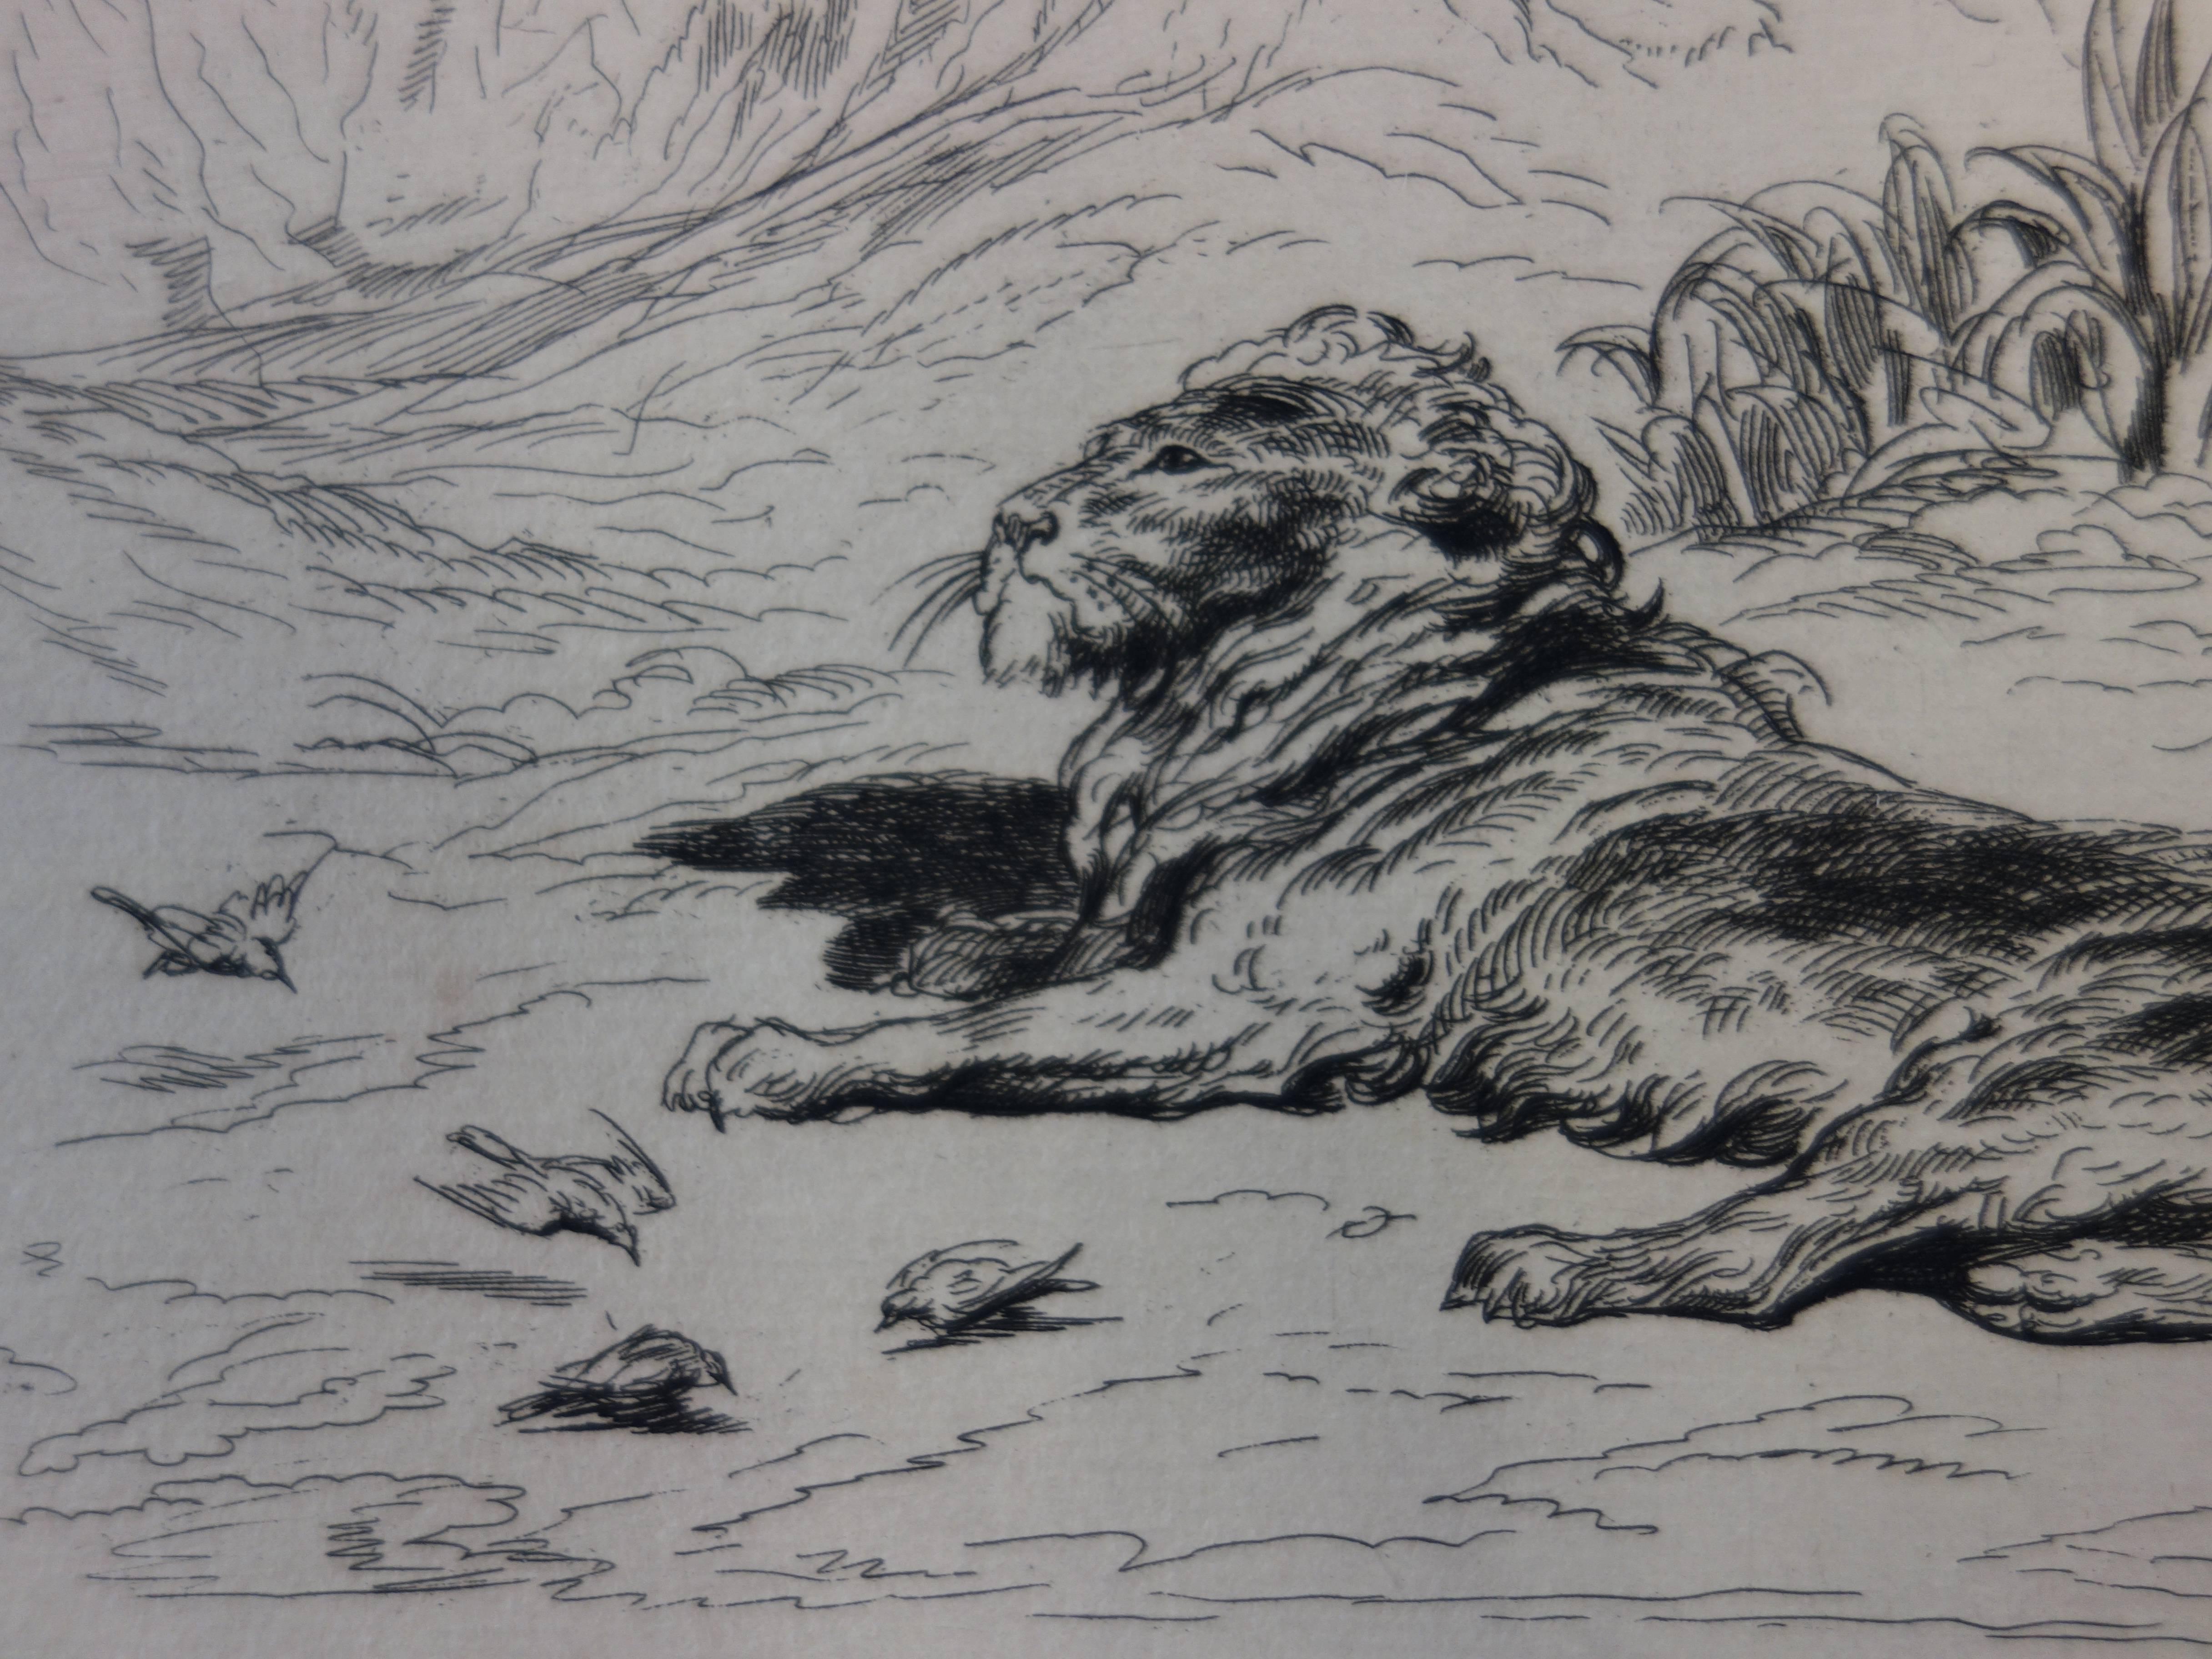 Reclining Lion - Original etching - Gray Animal Print by Gustave Doré